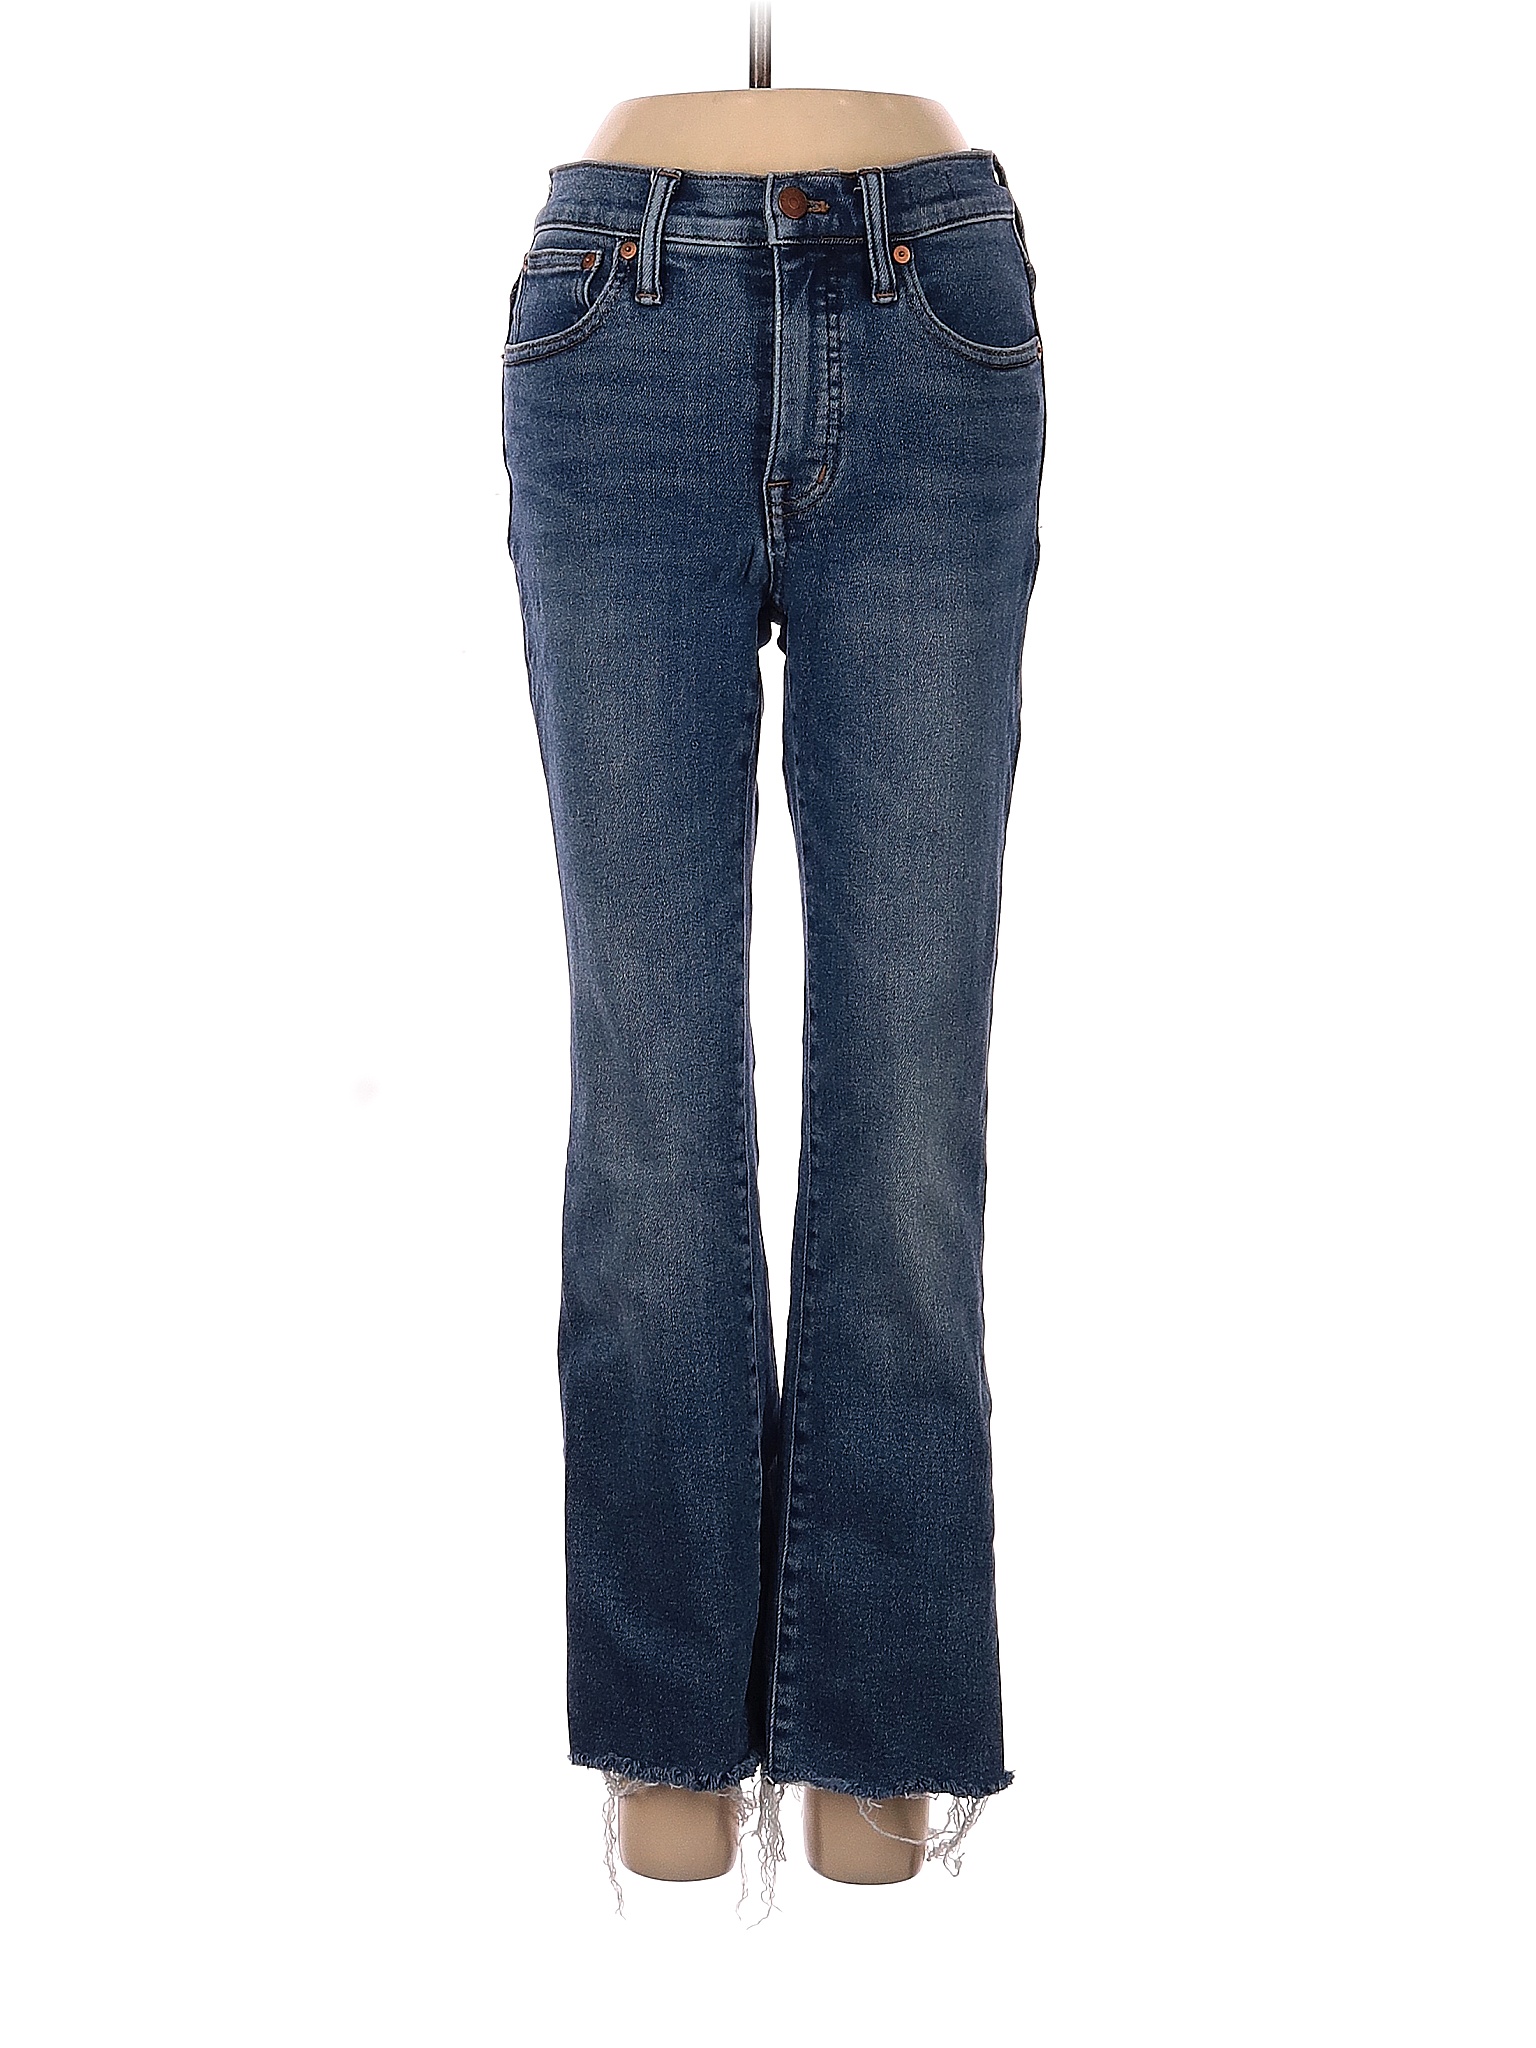 Madewell Solid Blue Jeans 25 Waist - 83% off | thredUP